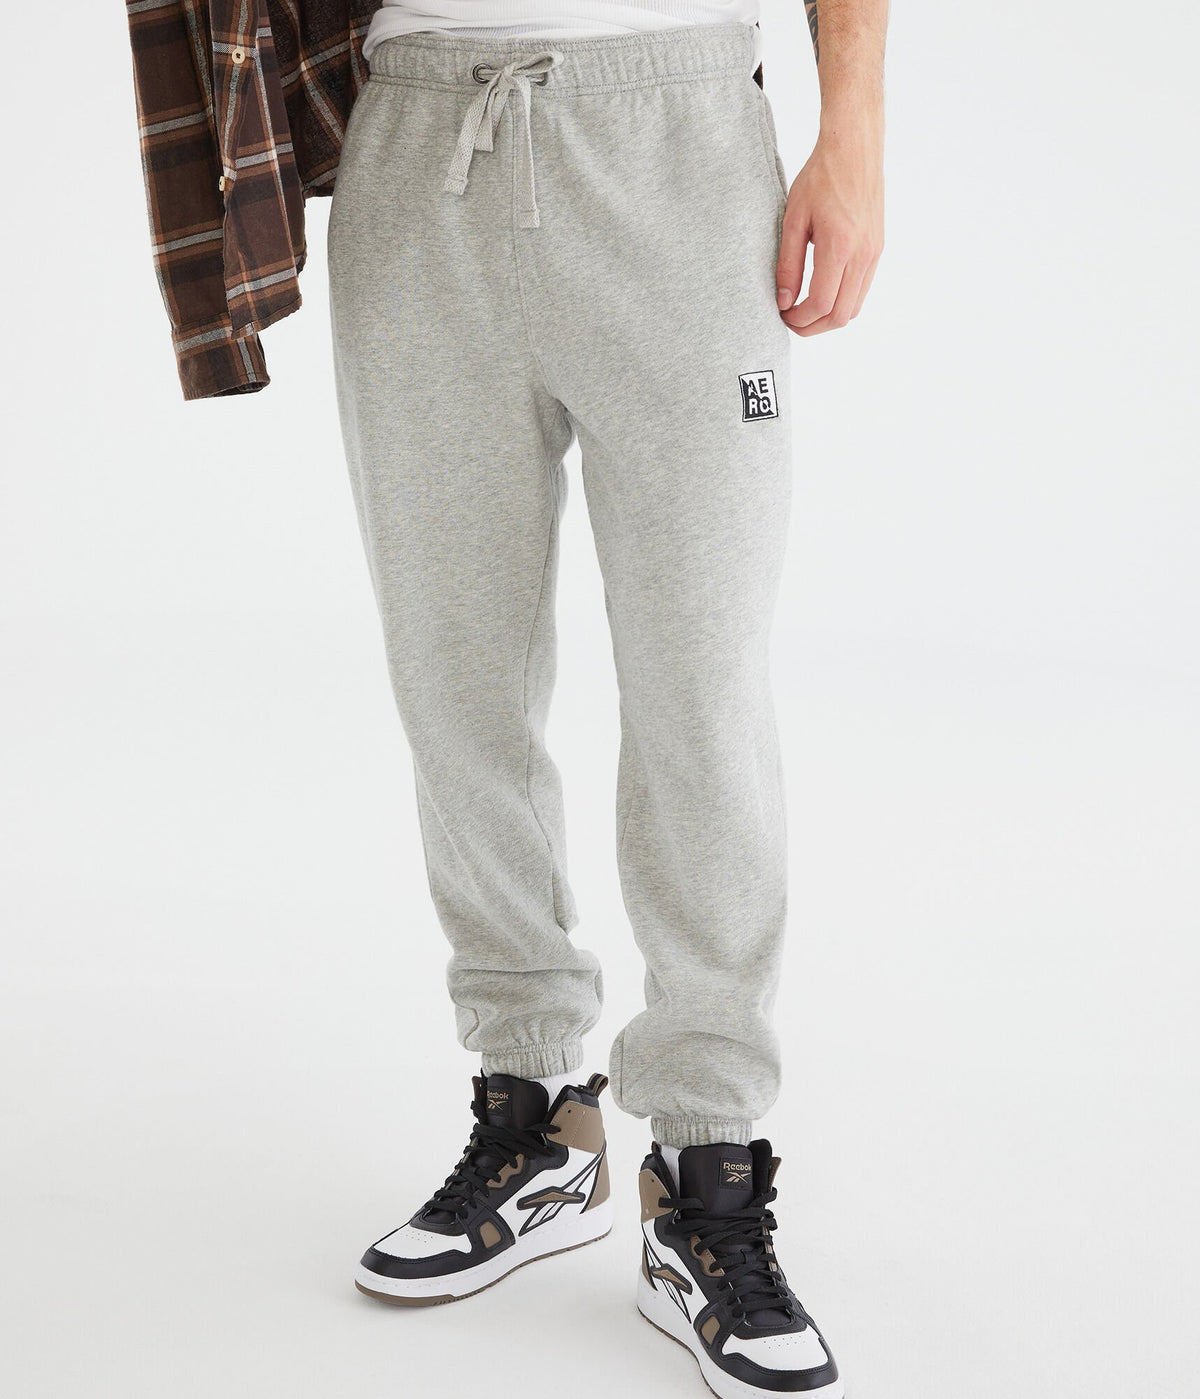 Aeropostale Mens' Stacked Split Box Logo Jogger Sweatpants - Grey - Size S - Cotton - Teen Fashion & Clothing Light Heather Grey